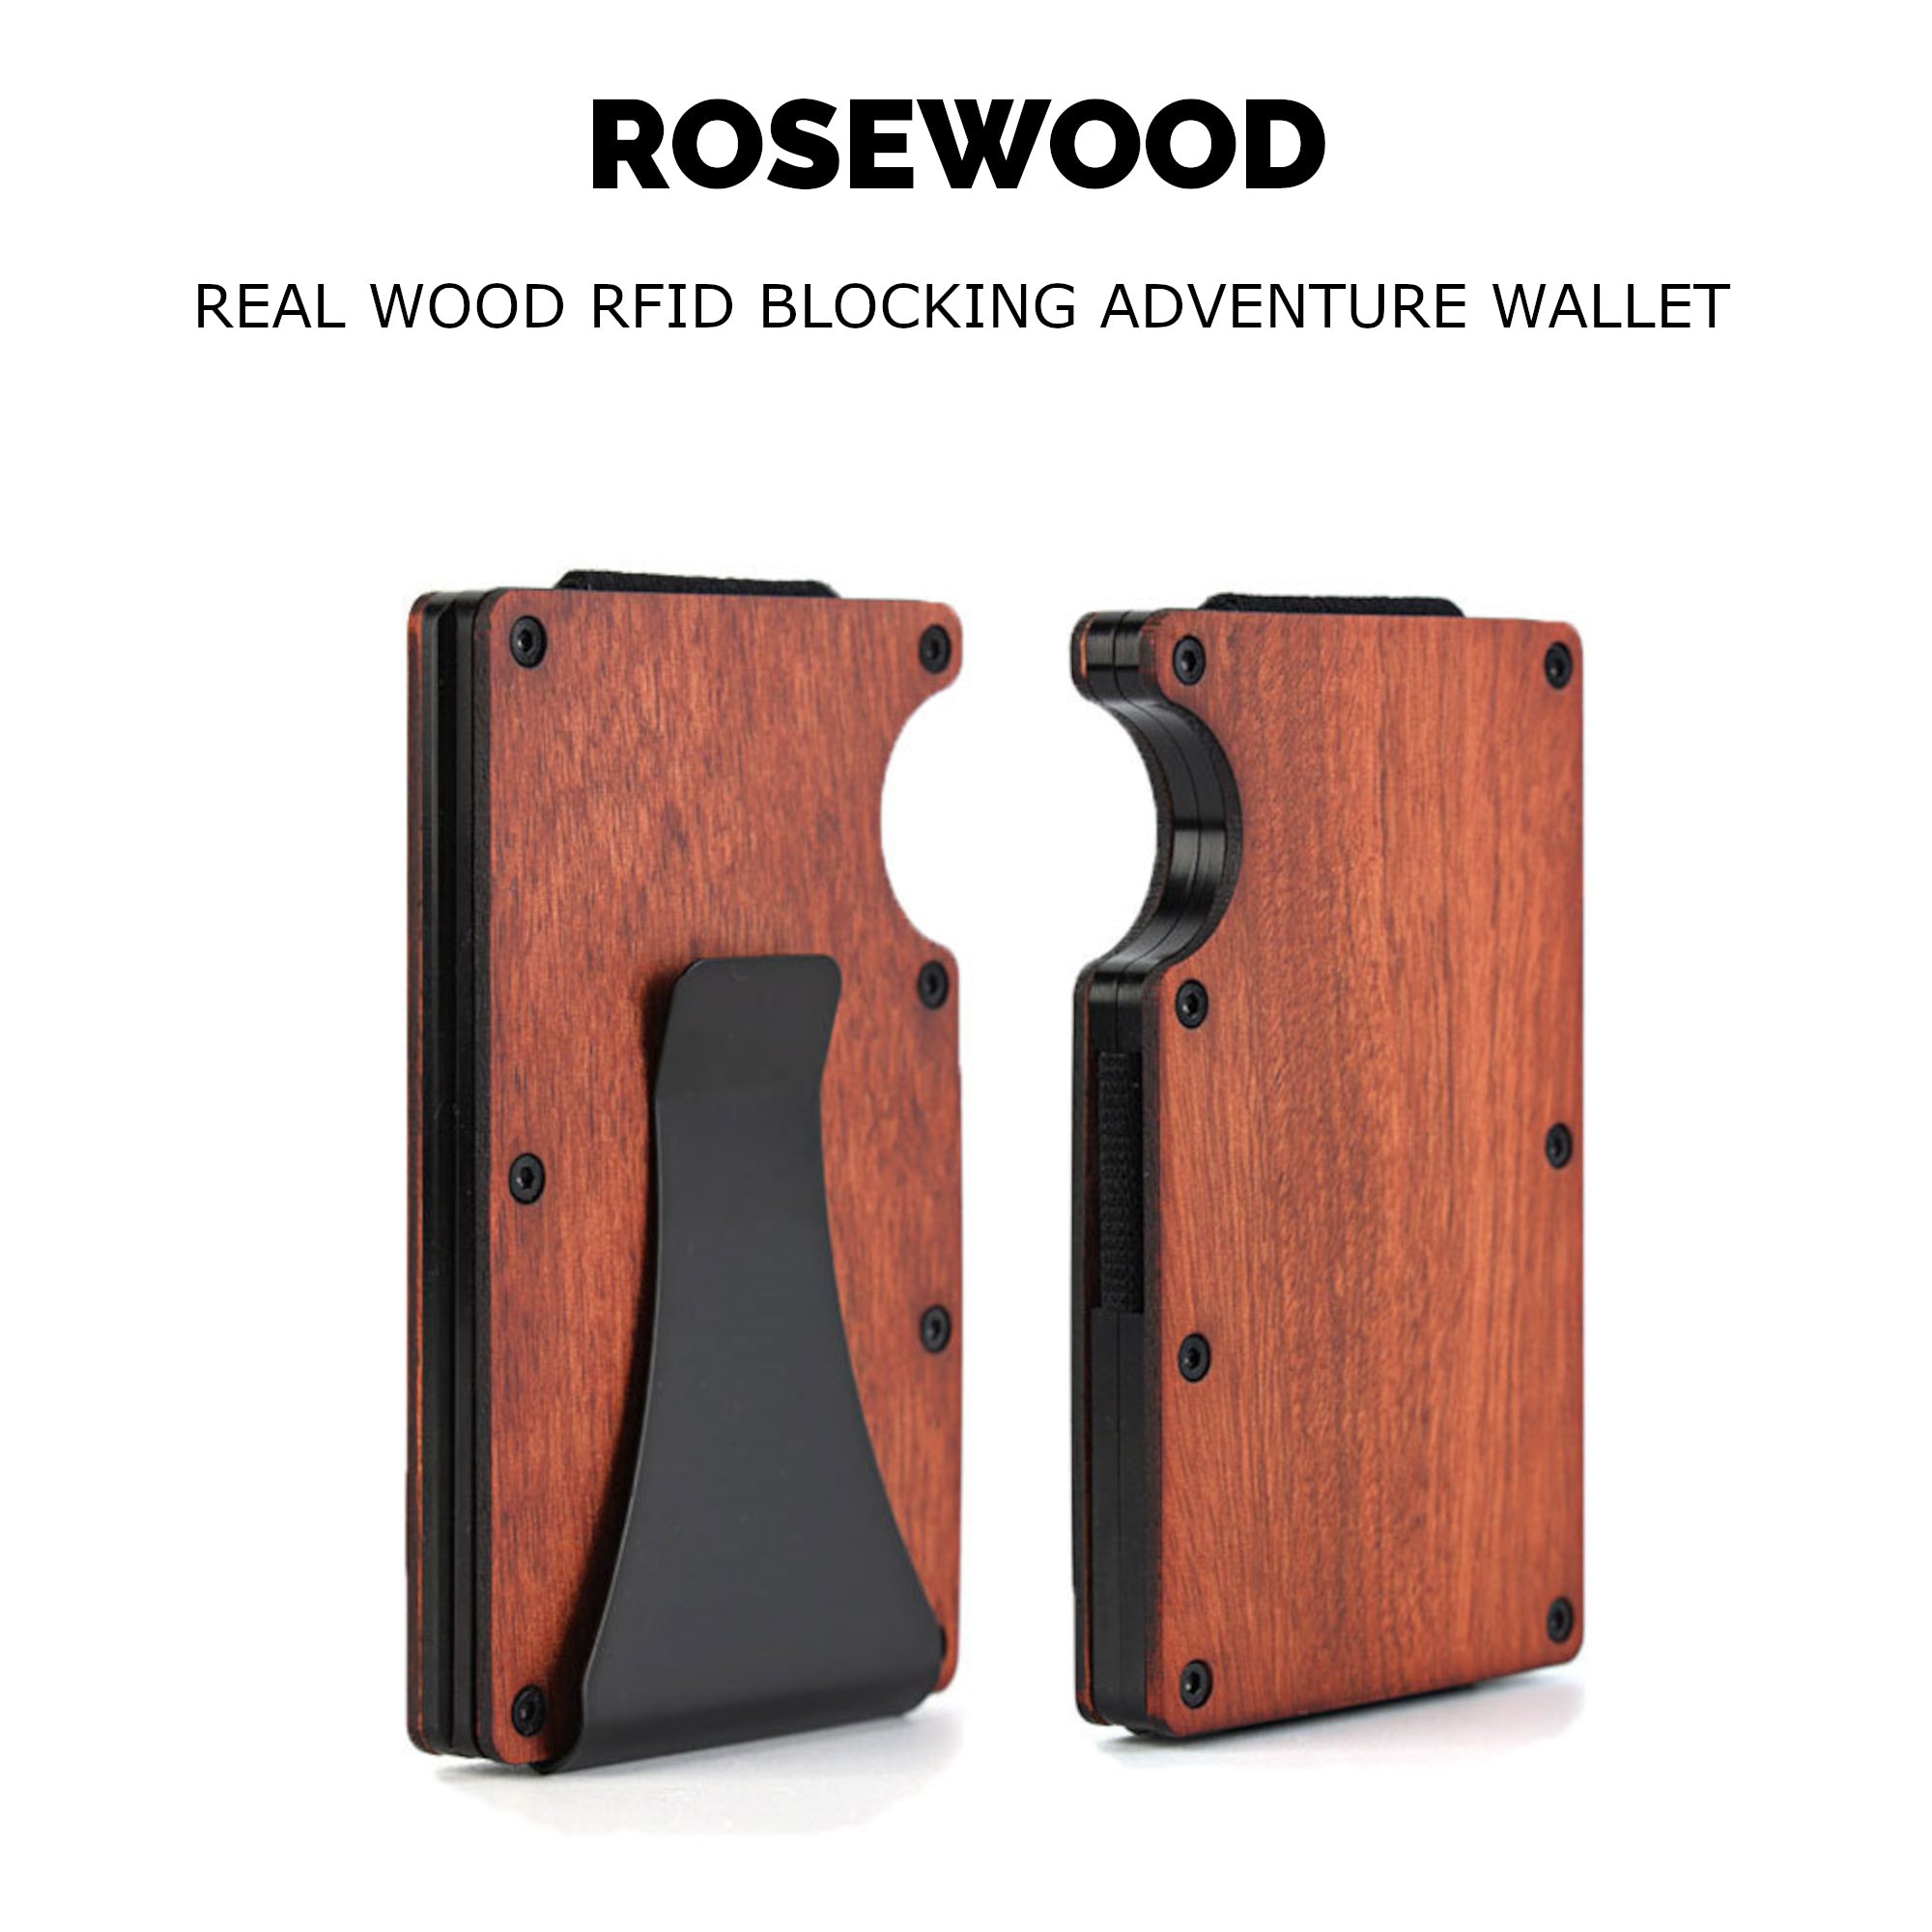 WUDN Adventure Wallet (Hardwood Collection)